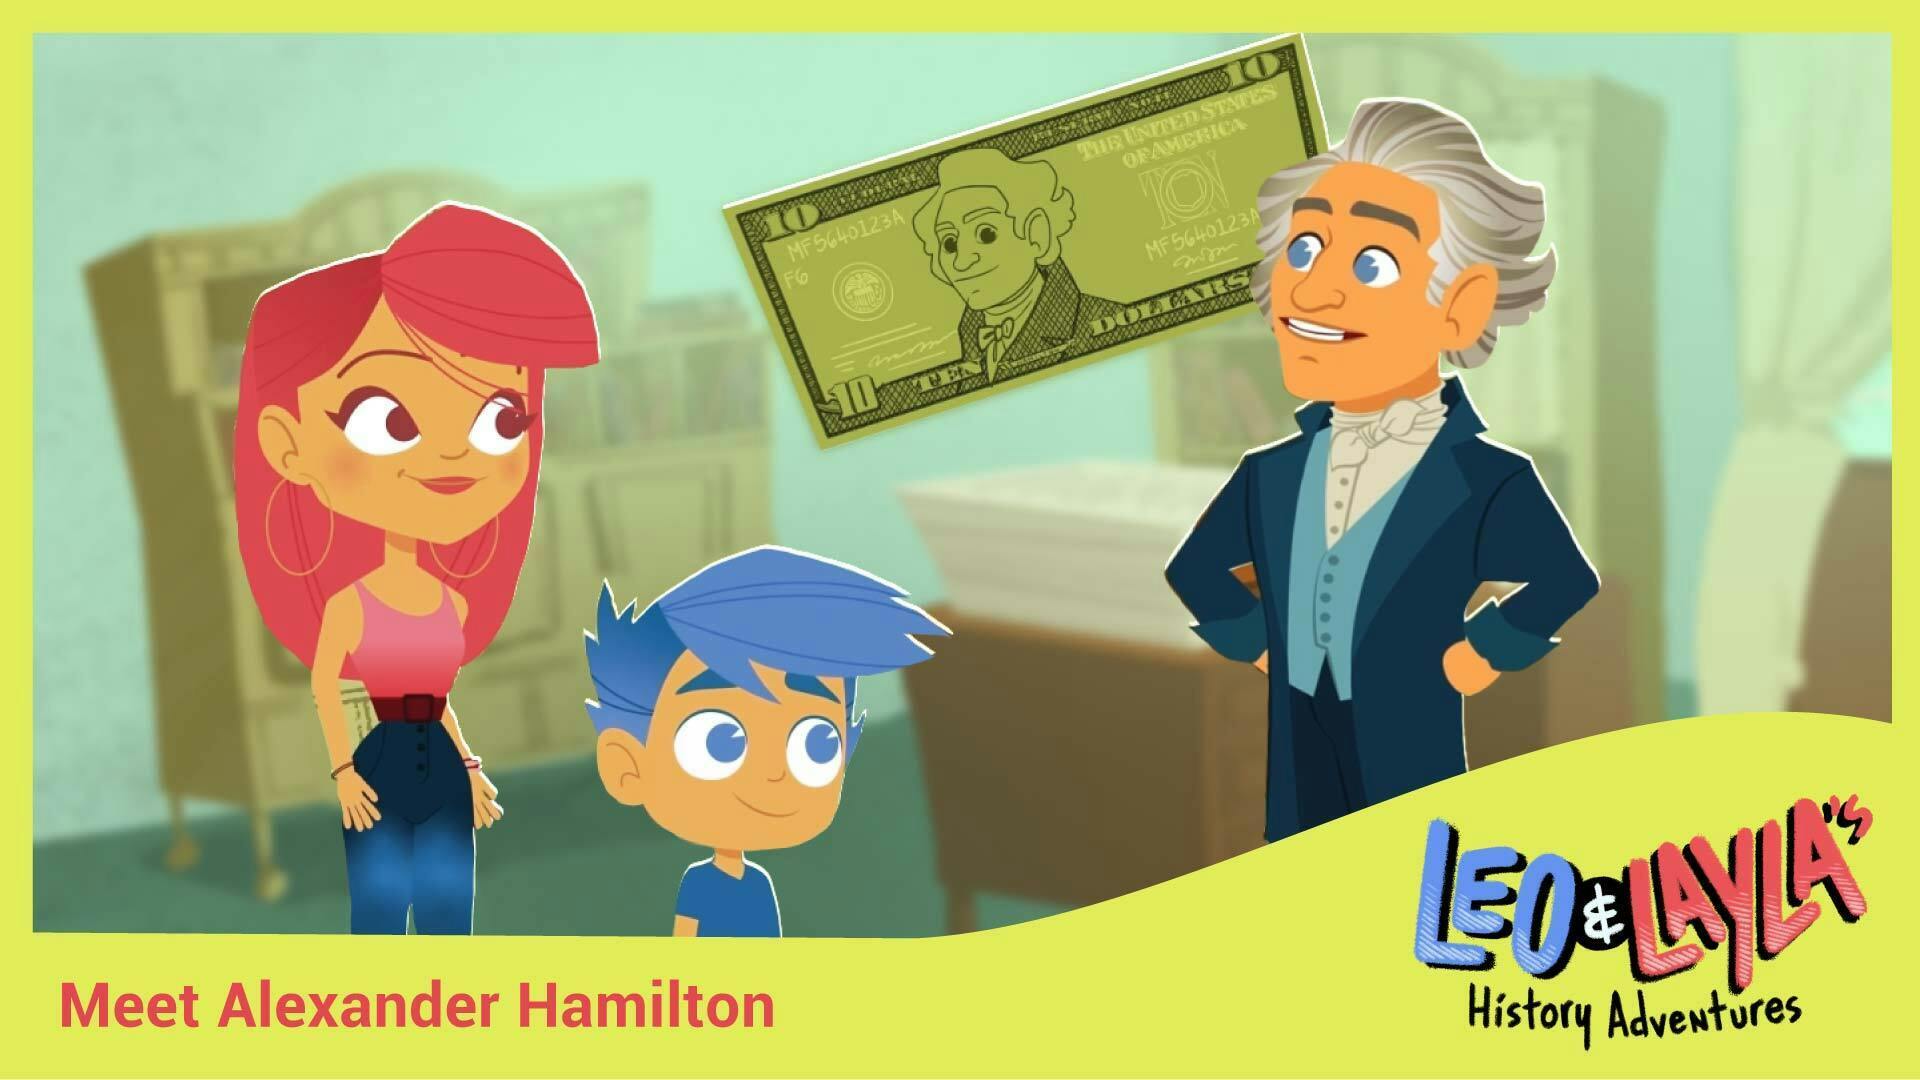 Alexander Hamilton: America’s First Secretary of Treasury